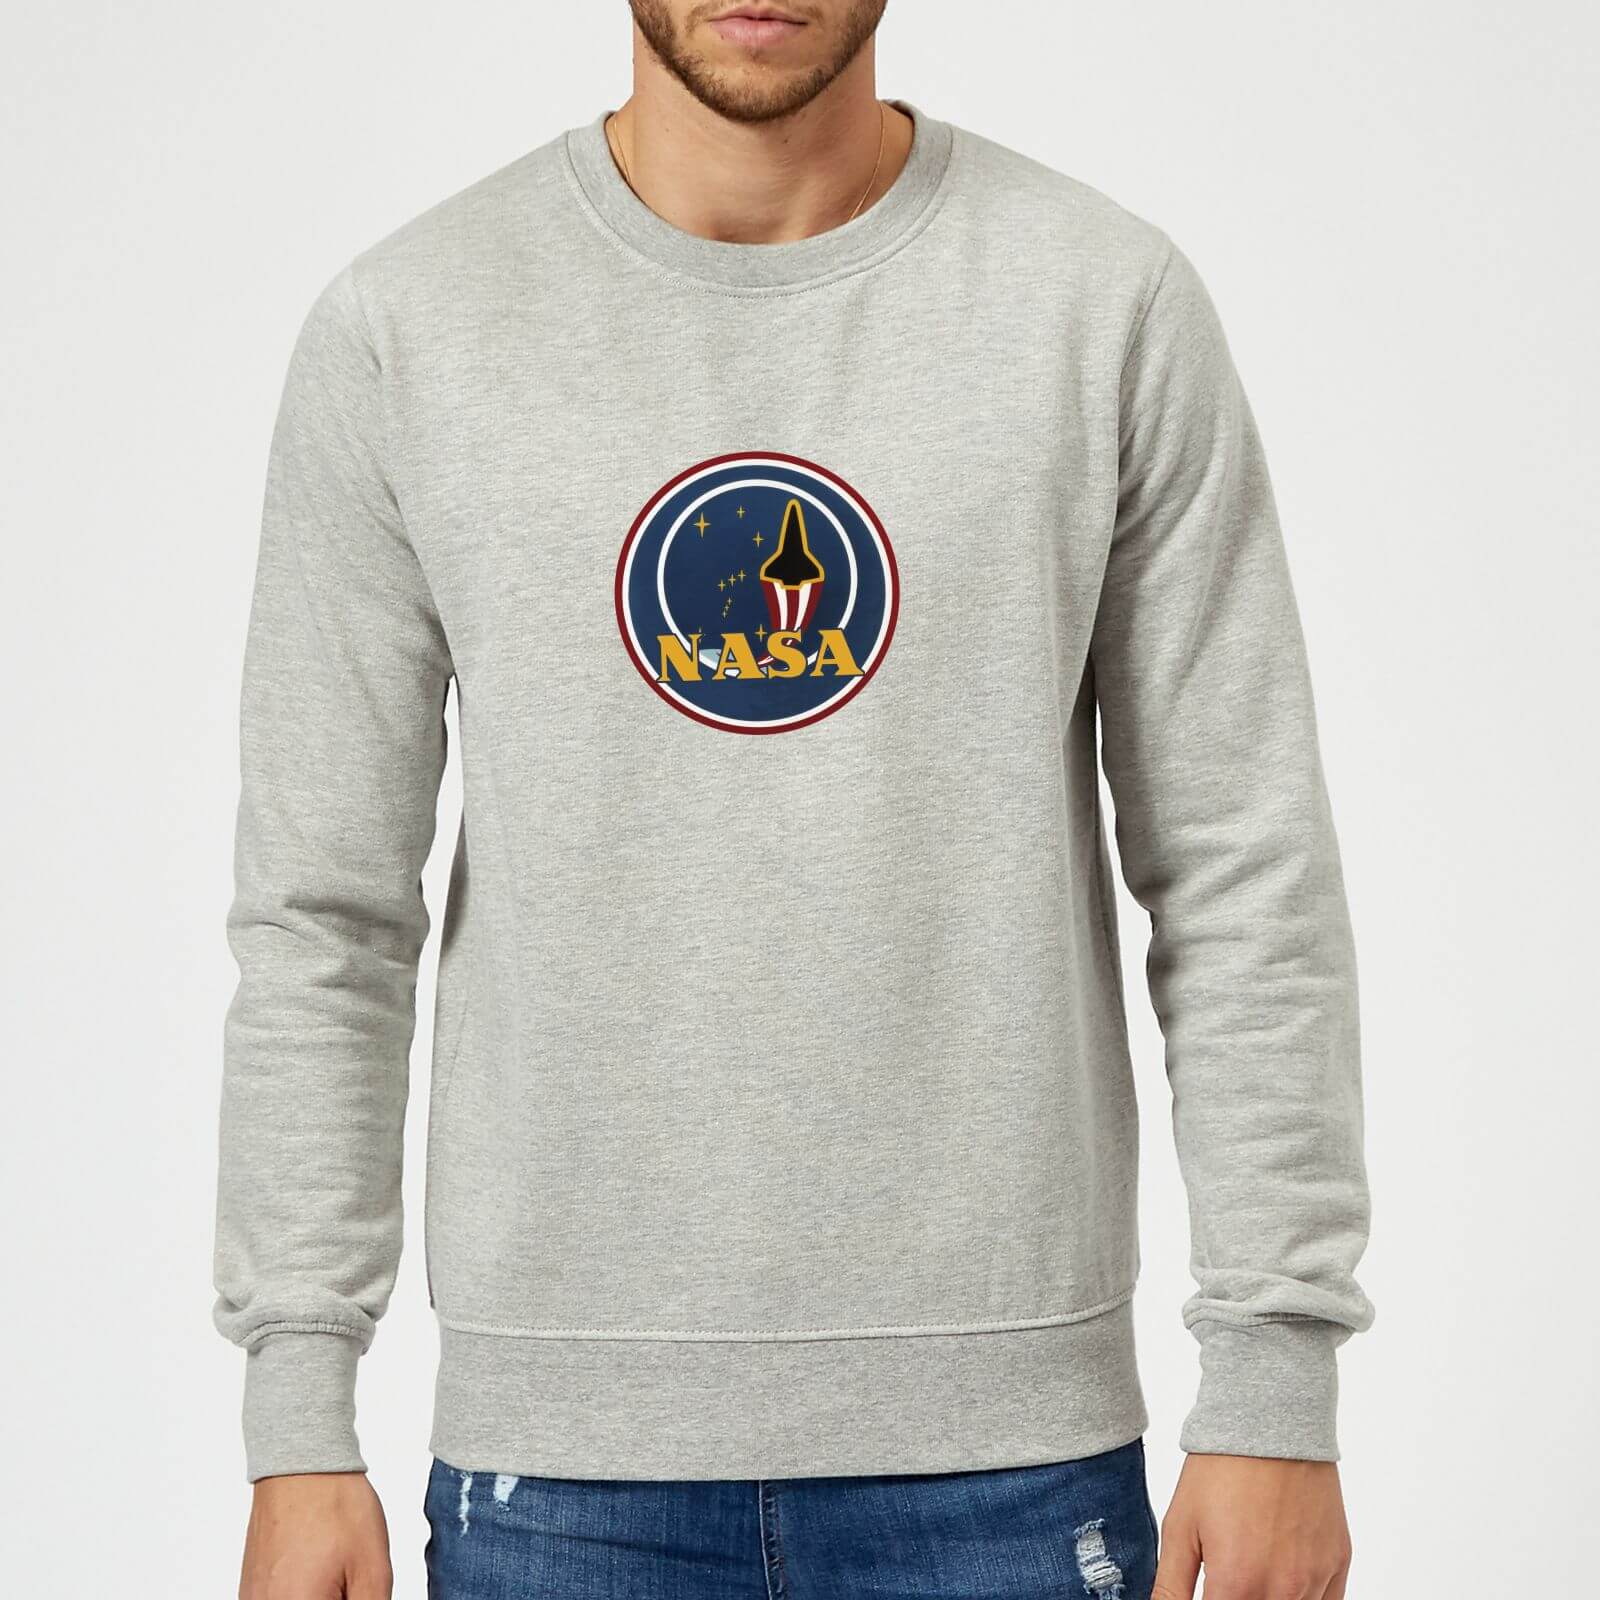 NASA JM Patch Sweatshirt - Grey - XL